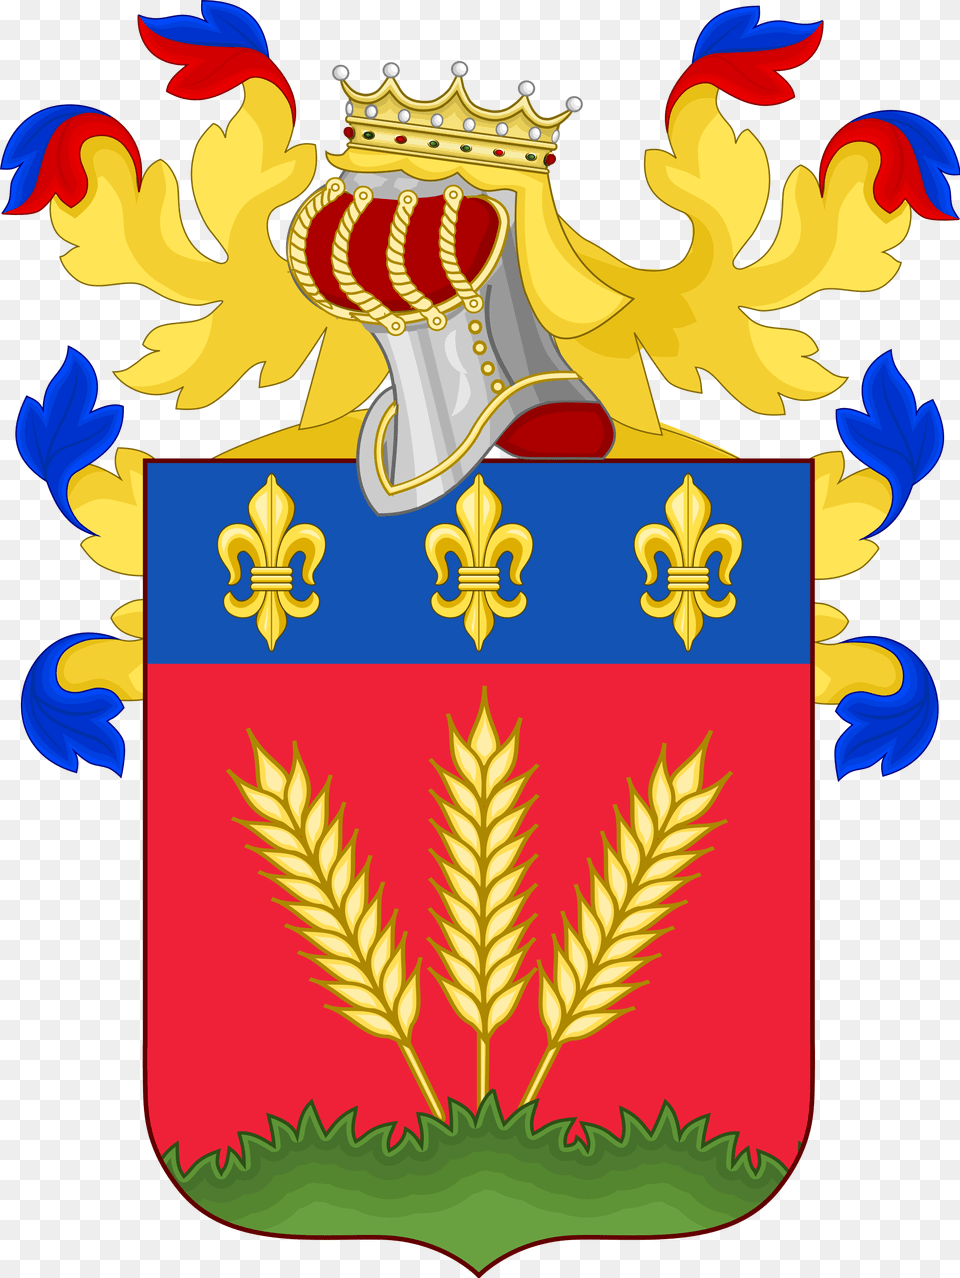 Unas Espigas De Trigo En El Escudo De La Familia Belgrano, Emblem, Symbol, Plant, Armor Png Image